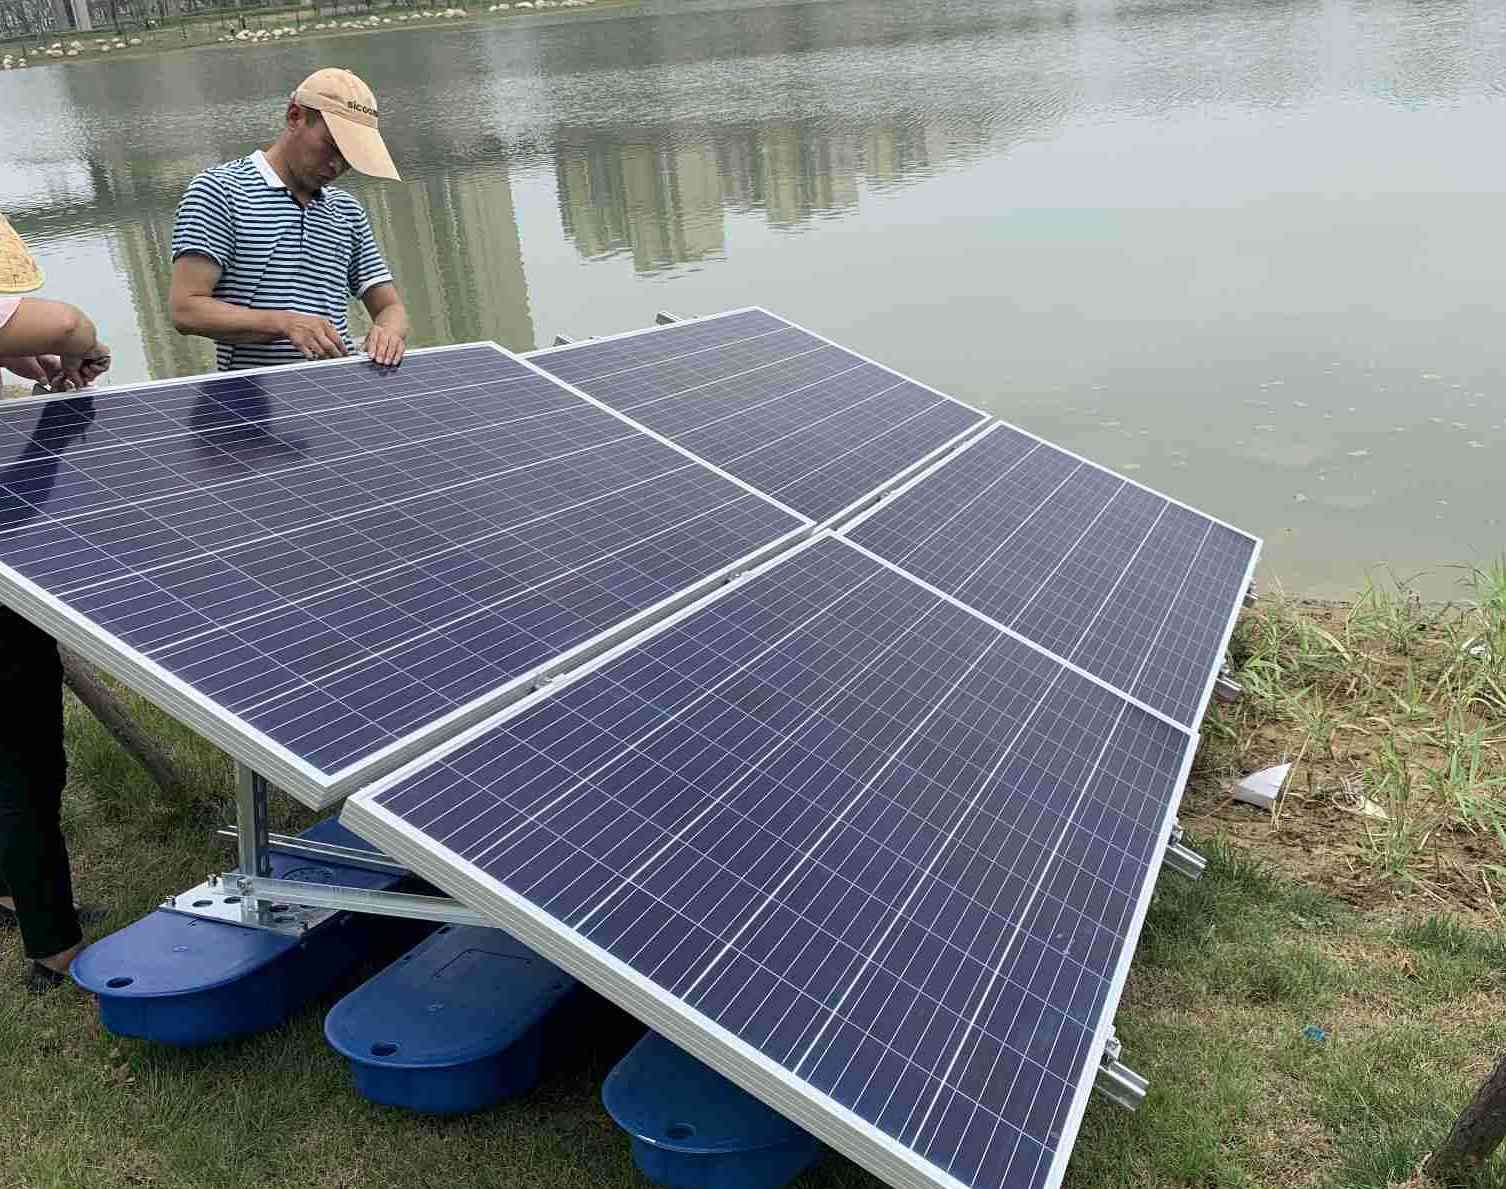  JNTECH تم تطبيق نظام التهوية الشمسية بنجاح على مشروع الإدارة البيئية في Shenling تان Anqing مدينة